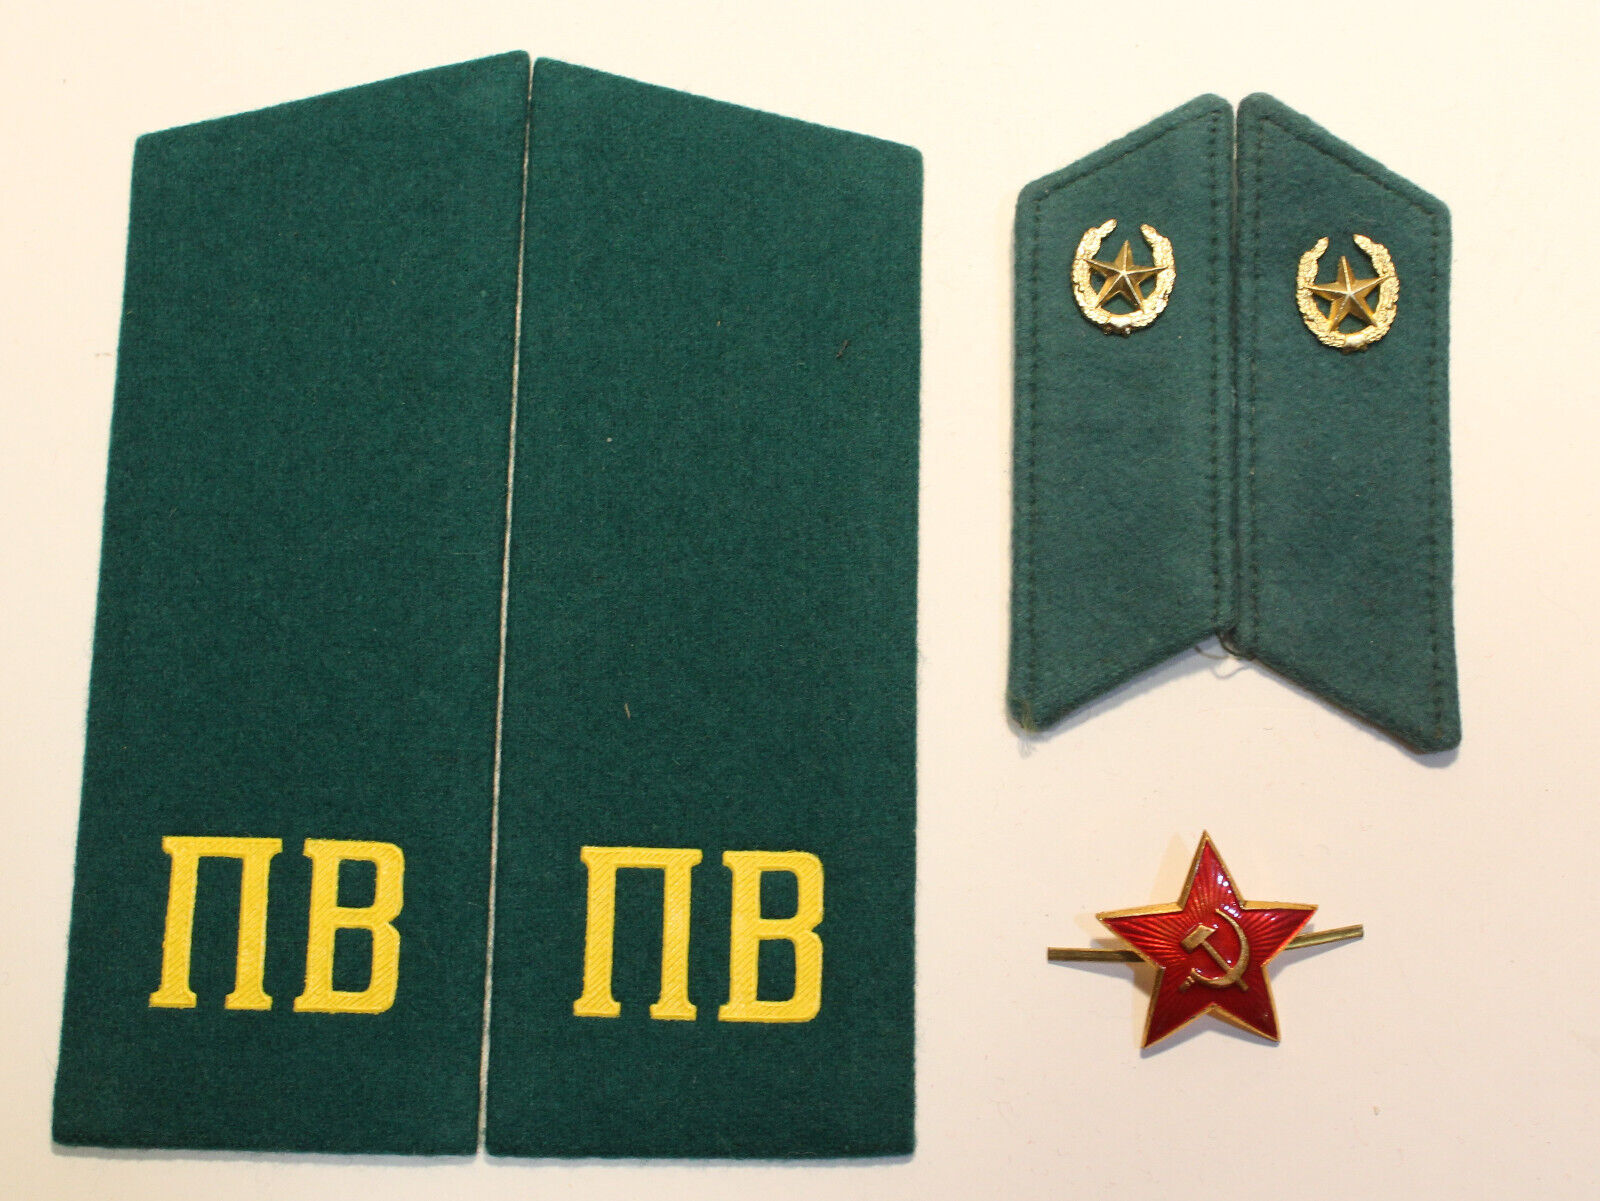 Soviet Russian Cold War Border Guard insignia: collar tabs, epaulets, hat star